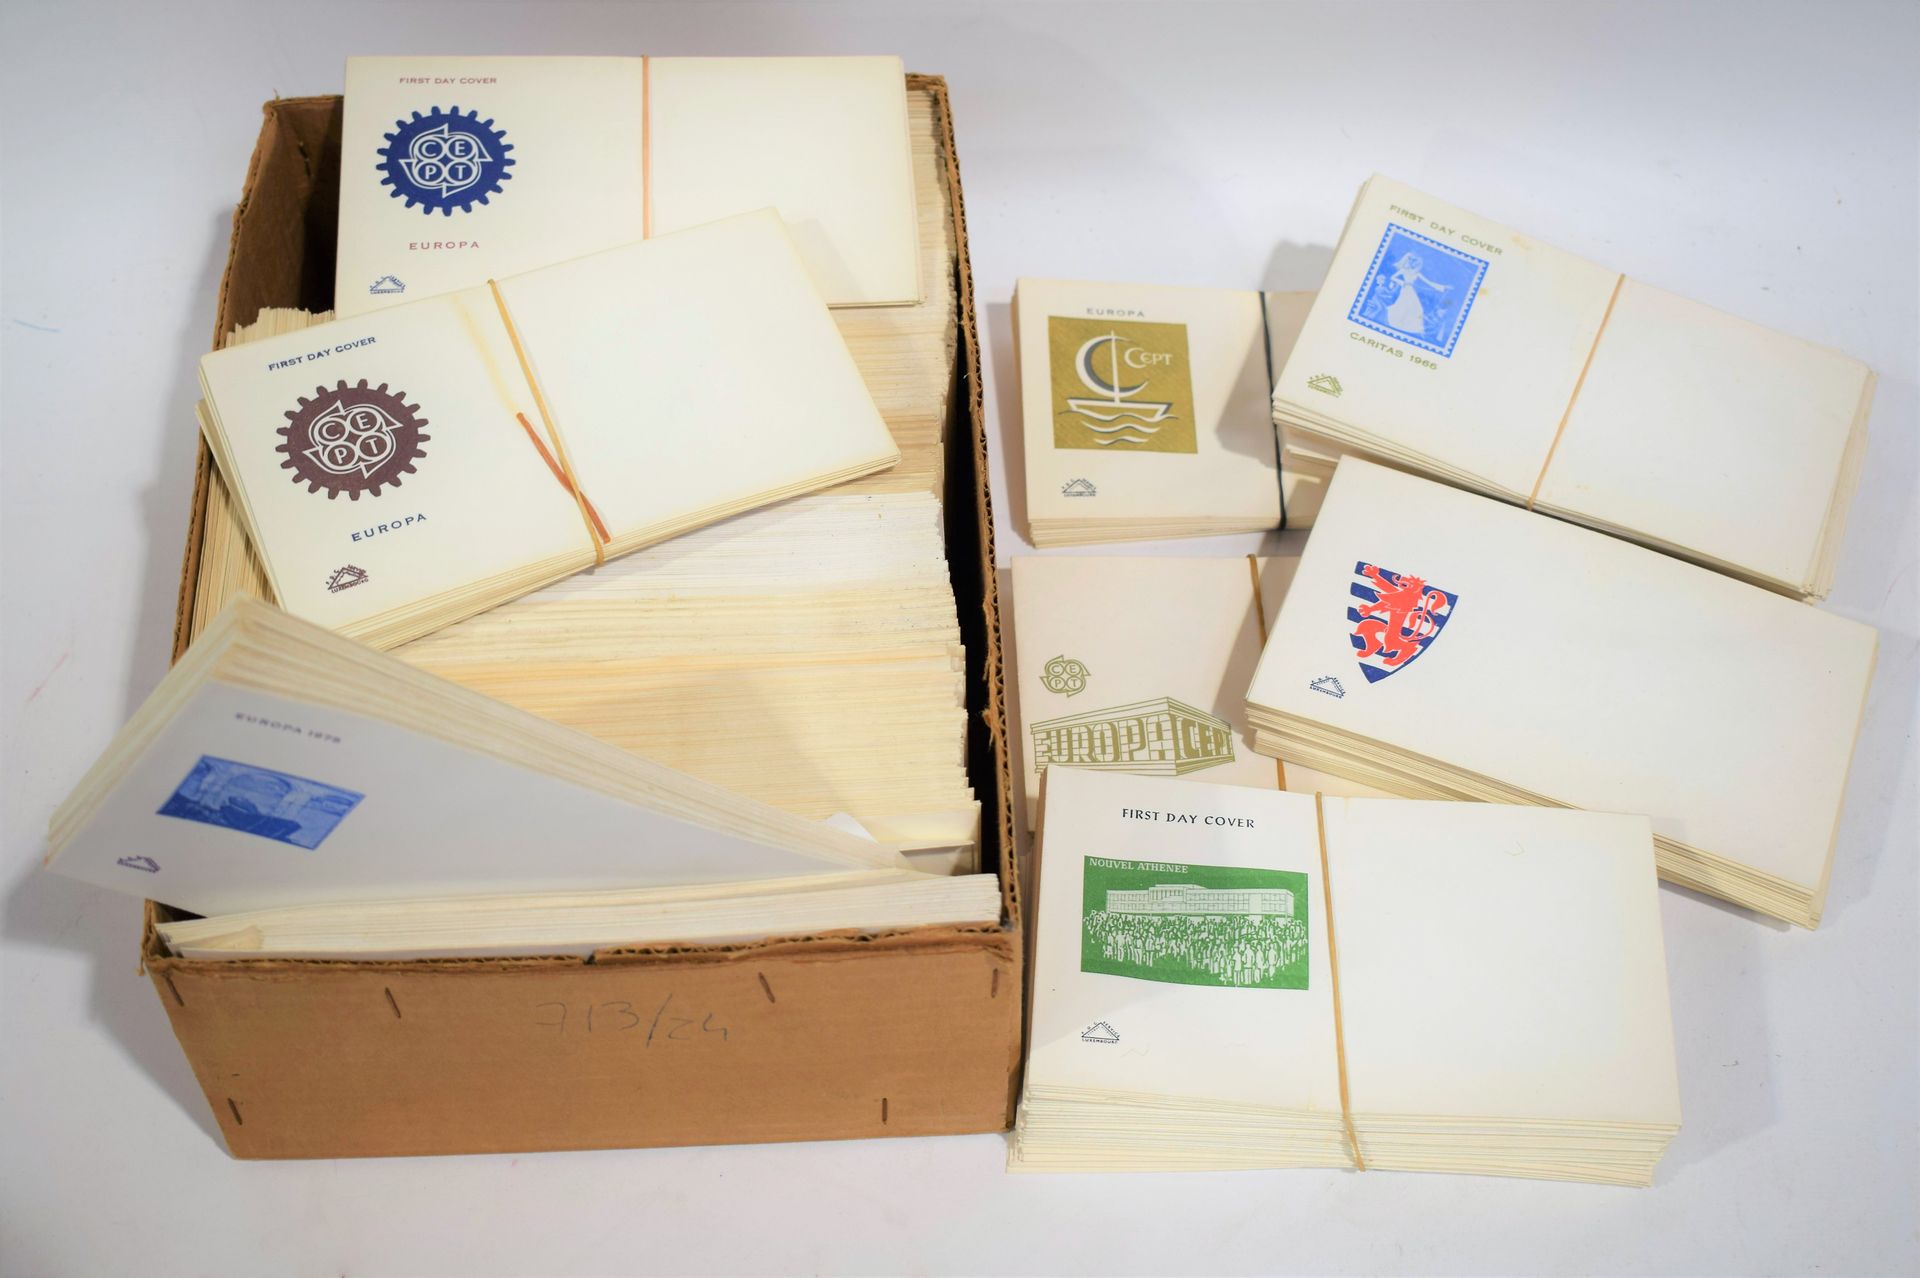 Null [信封] 在一个盒子里，积累了大量的 "首日封 "信封，从60年代（Fini TISSEN）到80年代初，都是空白的，而且有很多倍数。